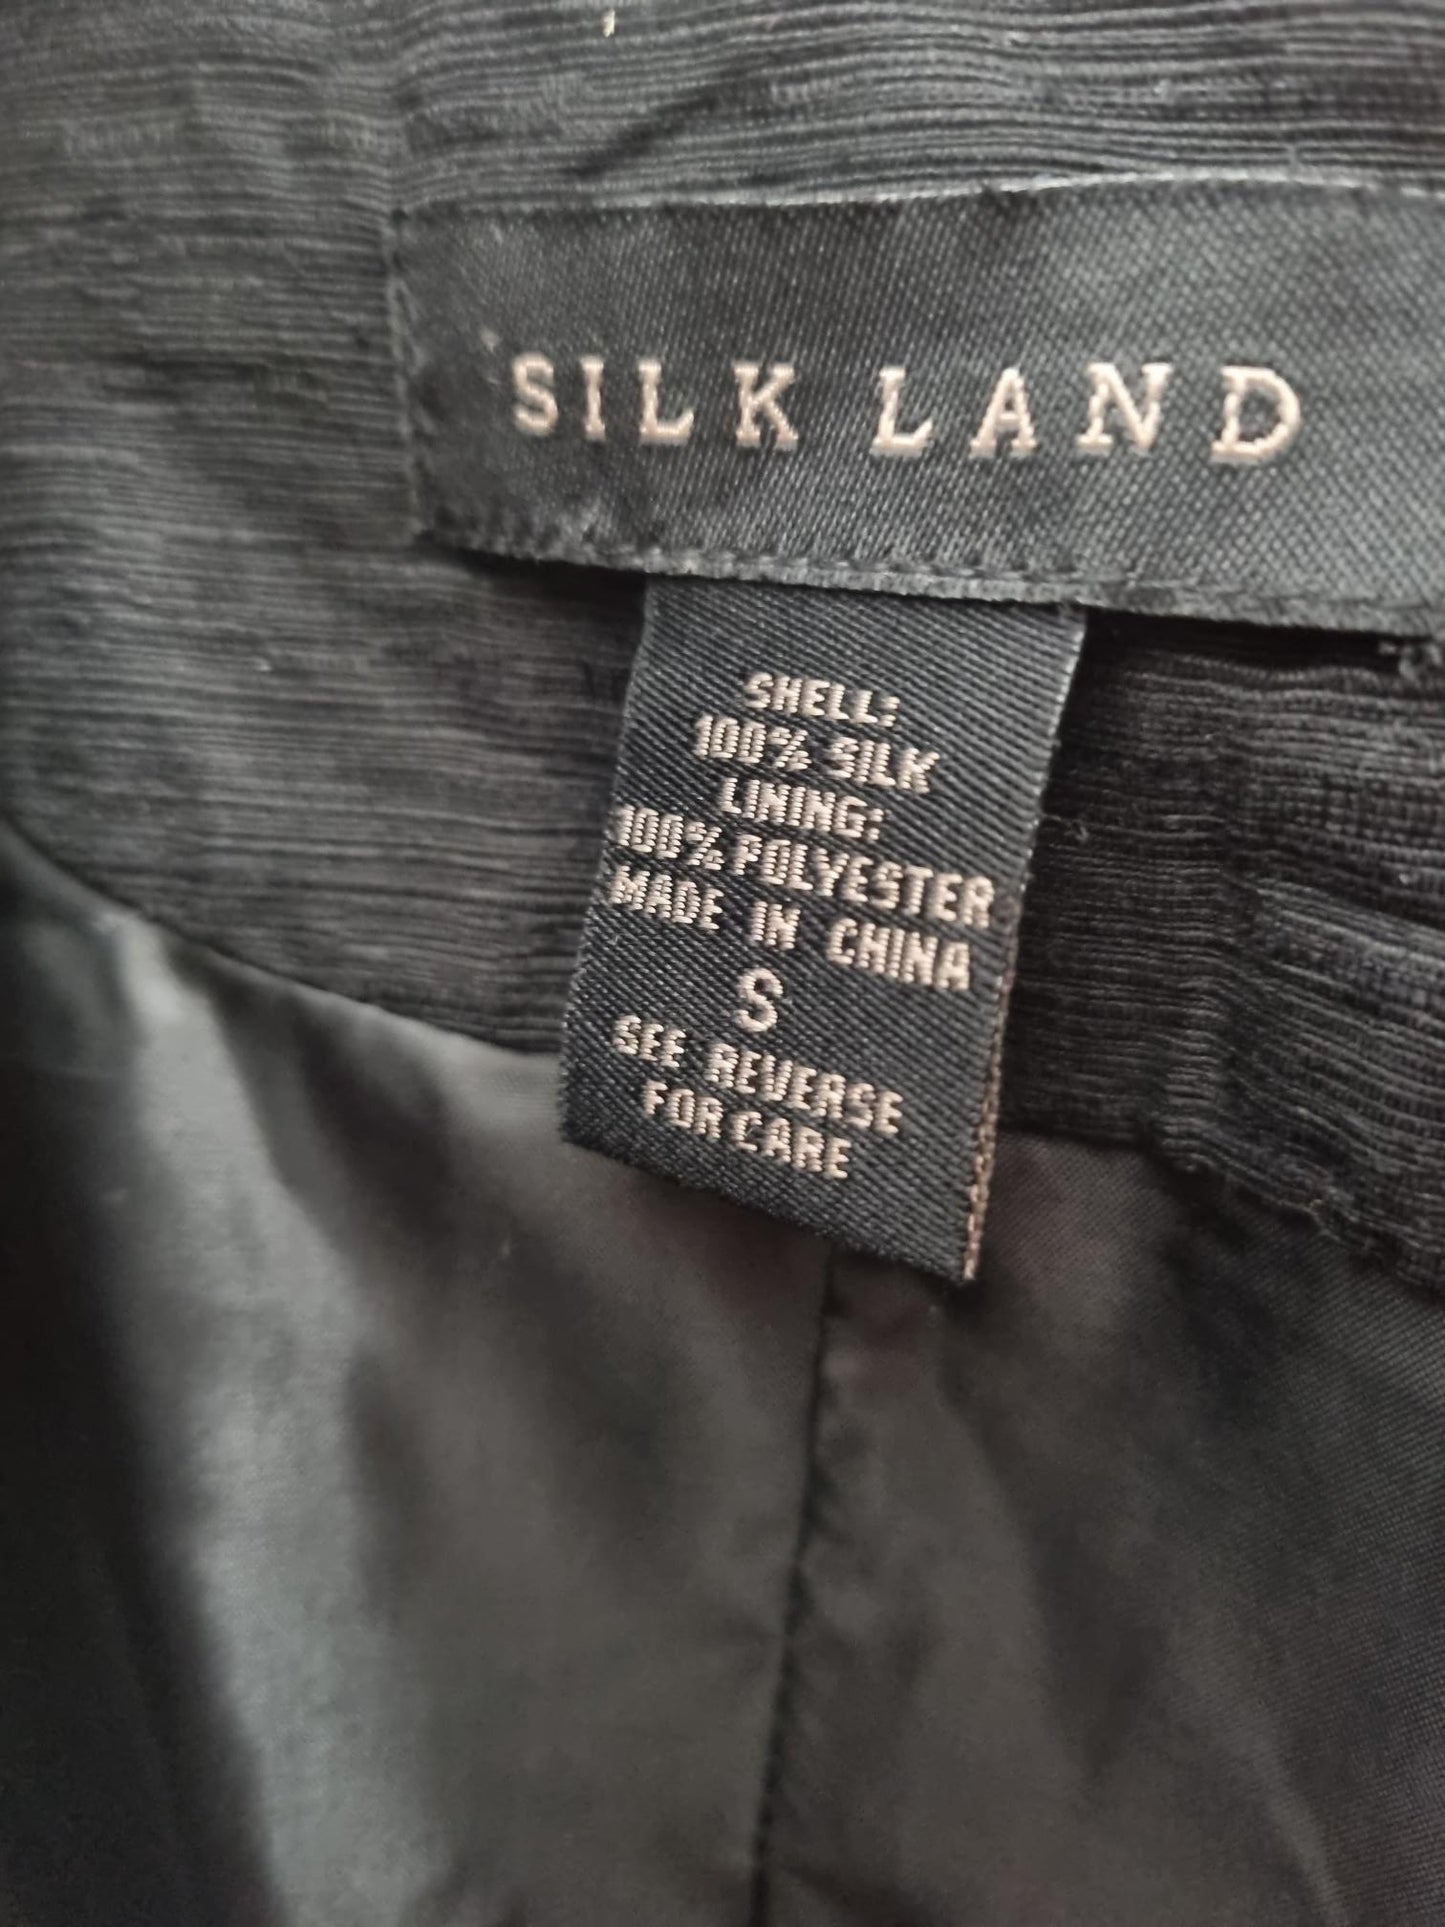 Silkland Black Jacket 100% Silk Size Small